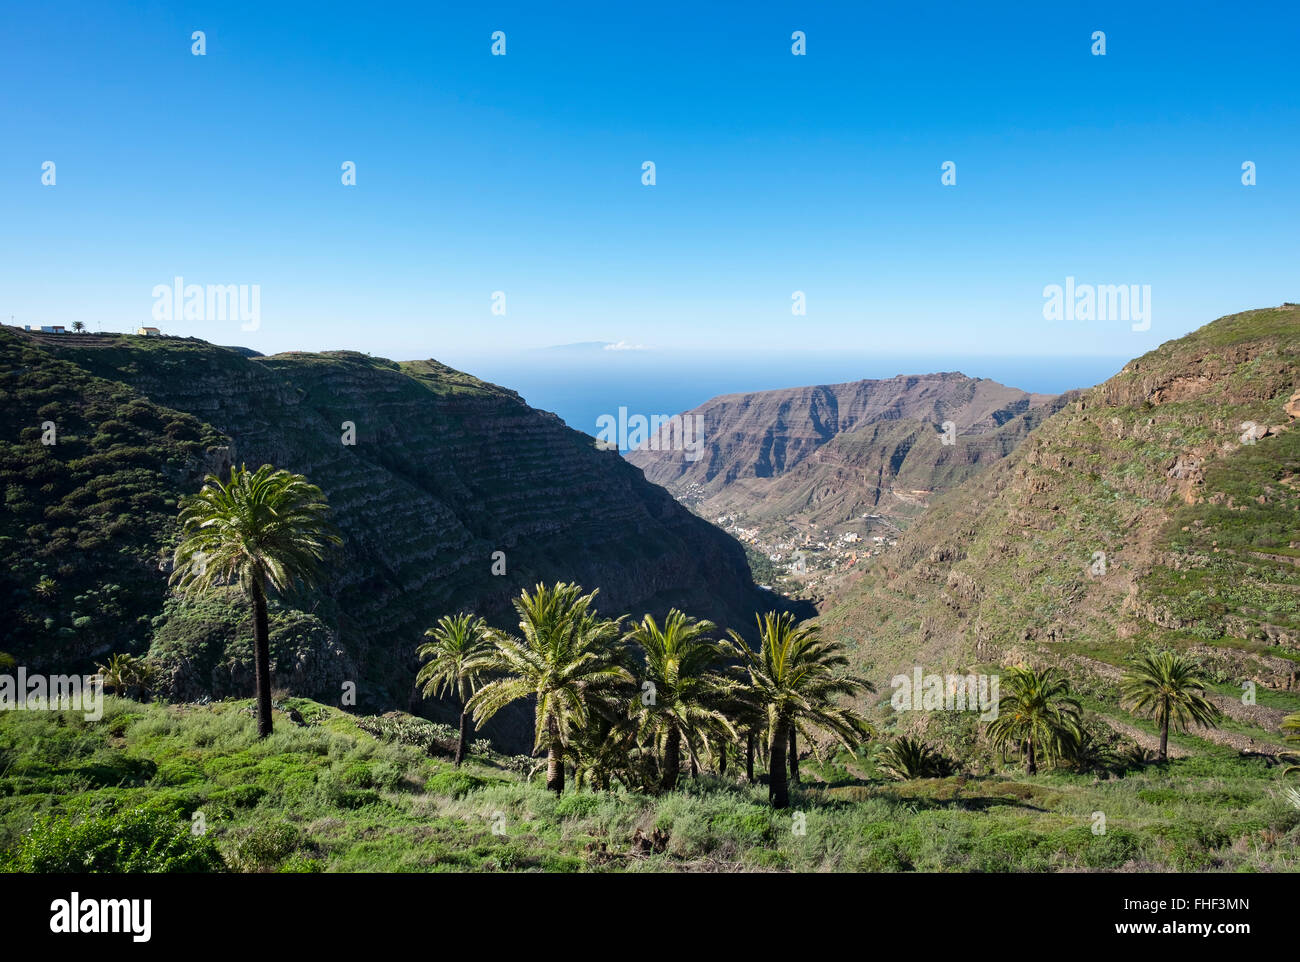 Valle Gran Rey avec palmiers, La Gomera, Canary Islands, Spain Banque D'Images